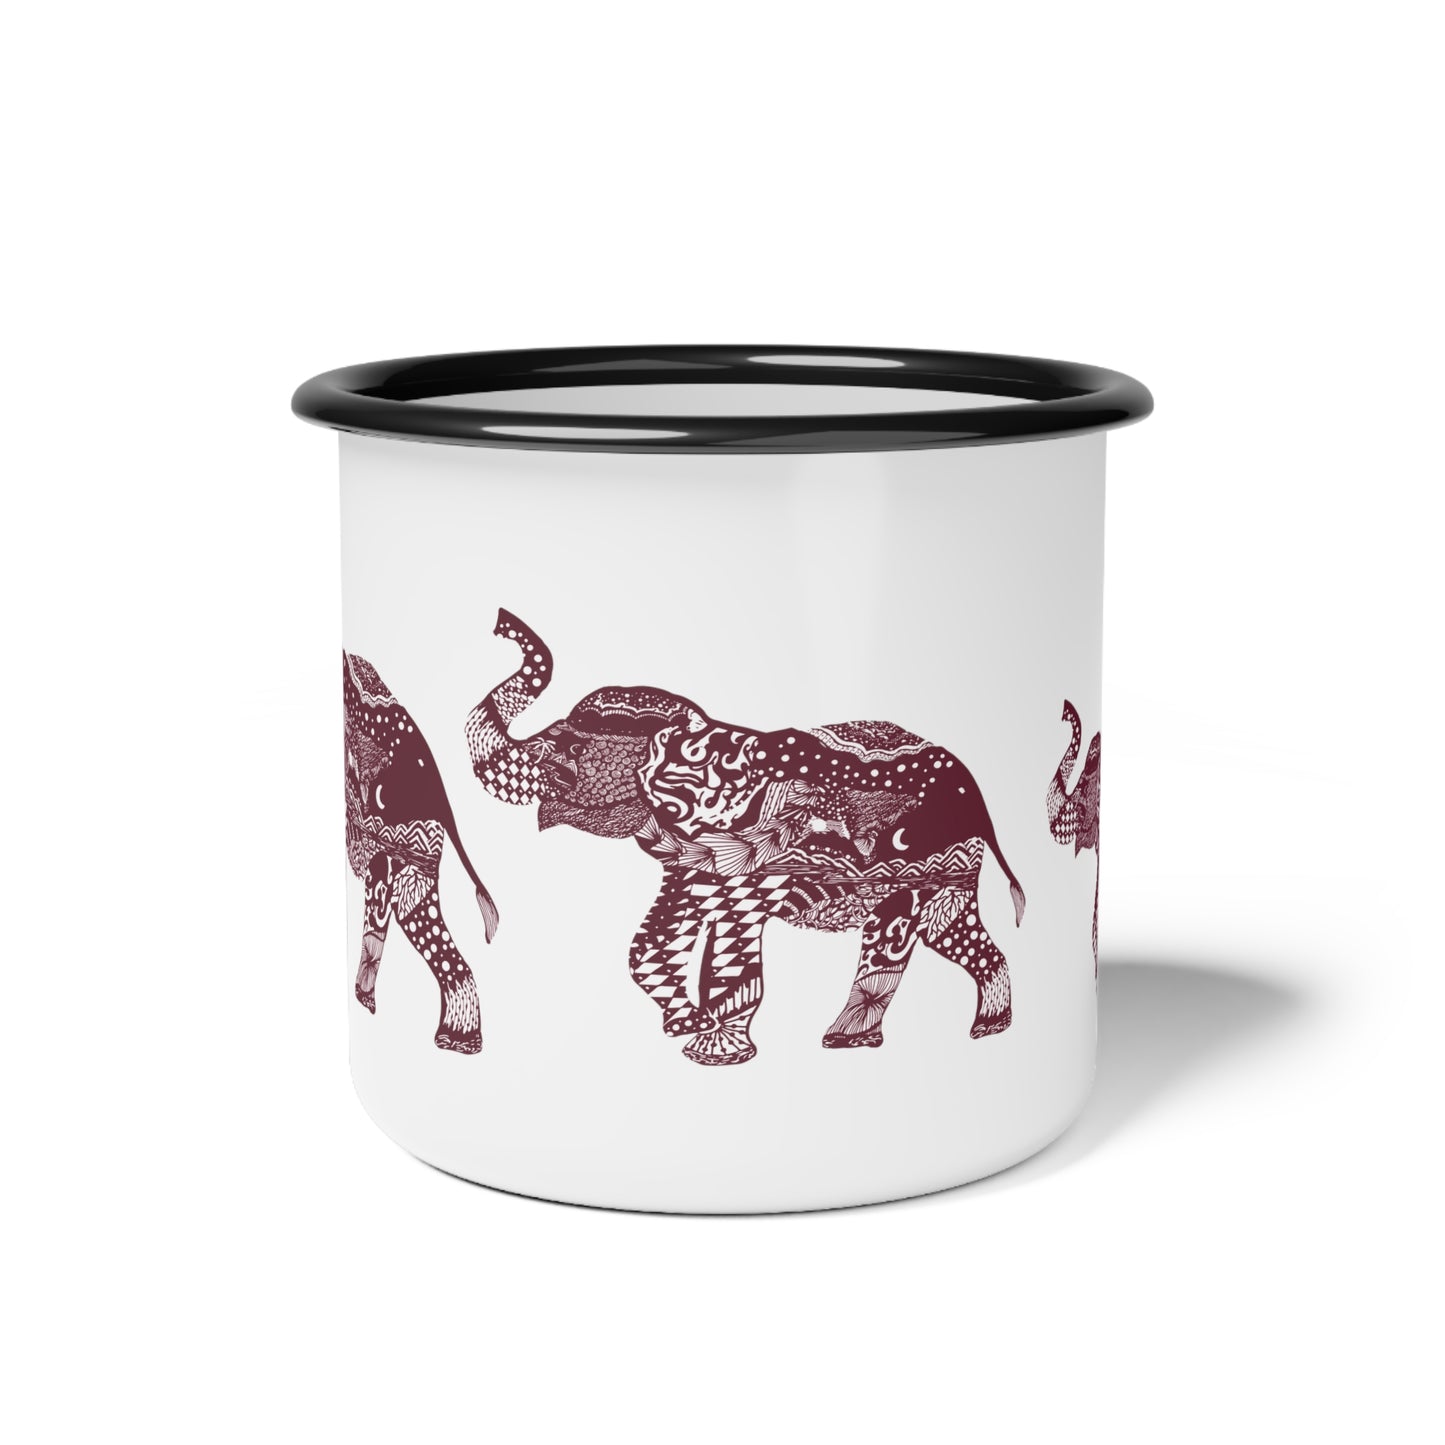 Elephant Maroon Enamel Camp Cup with Black rim